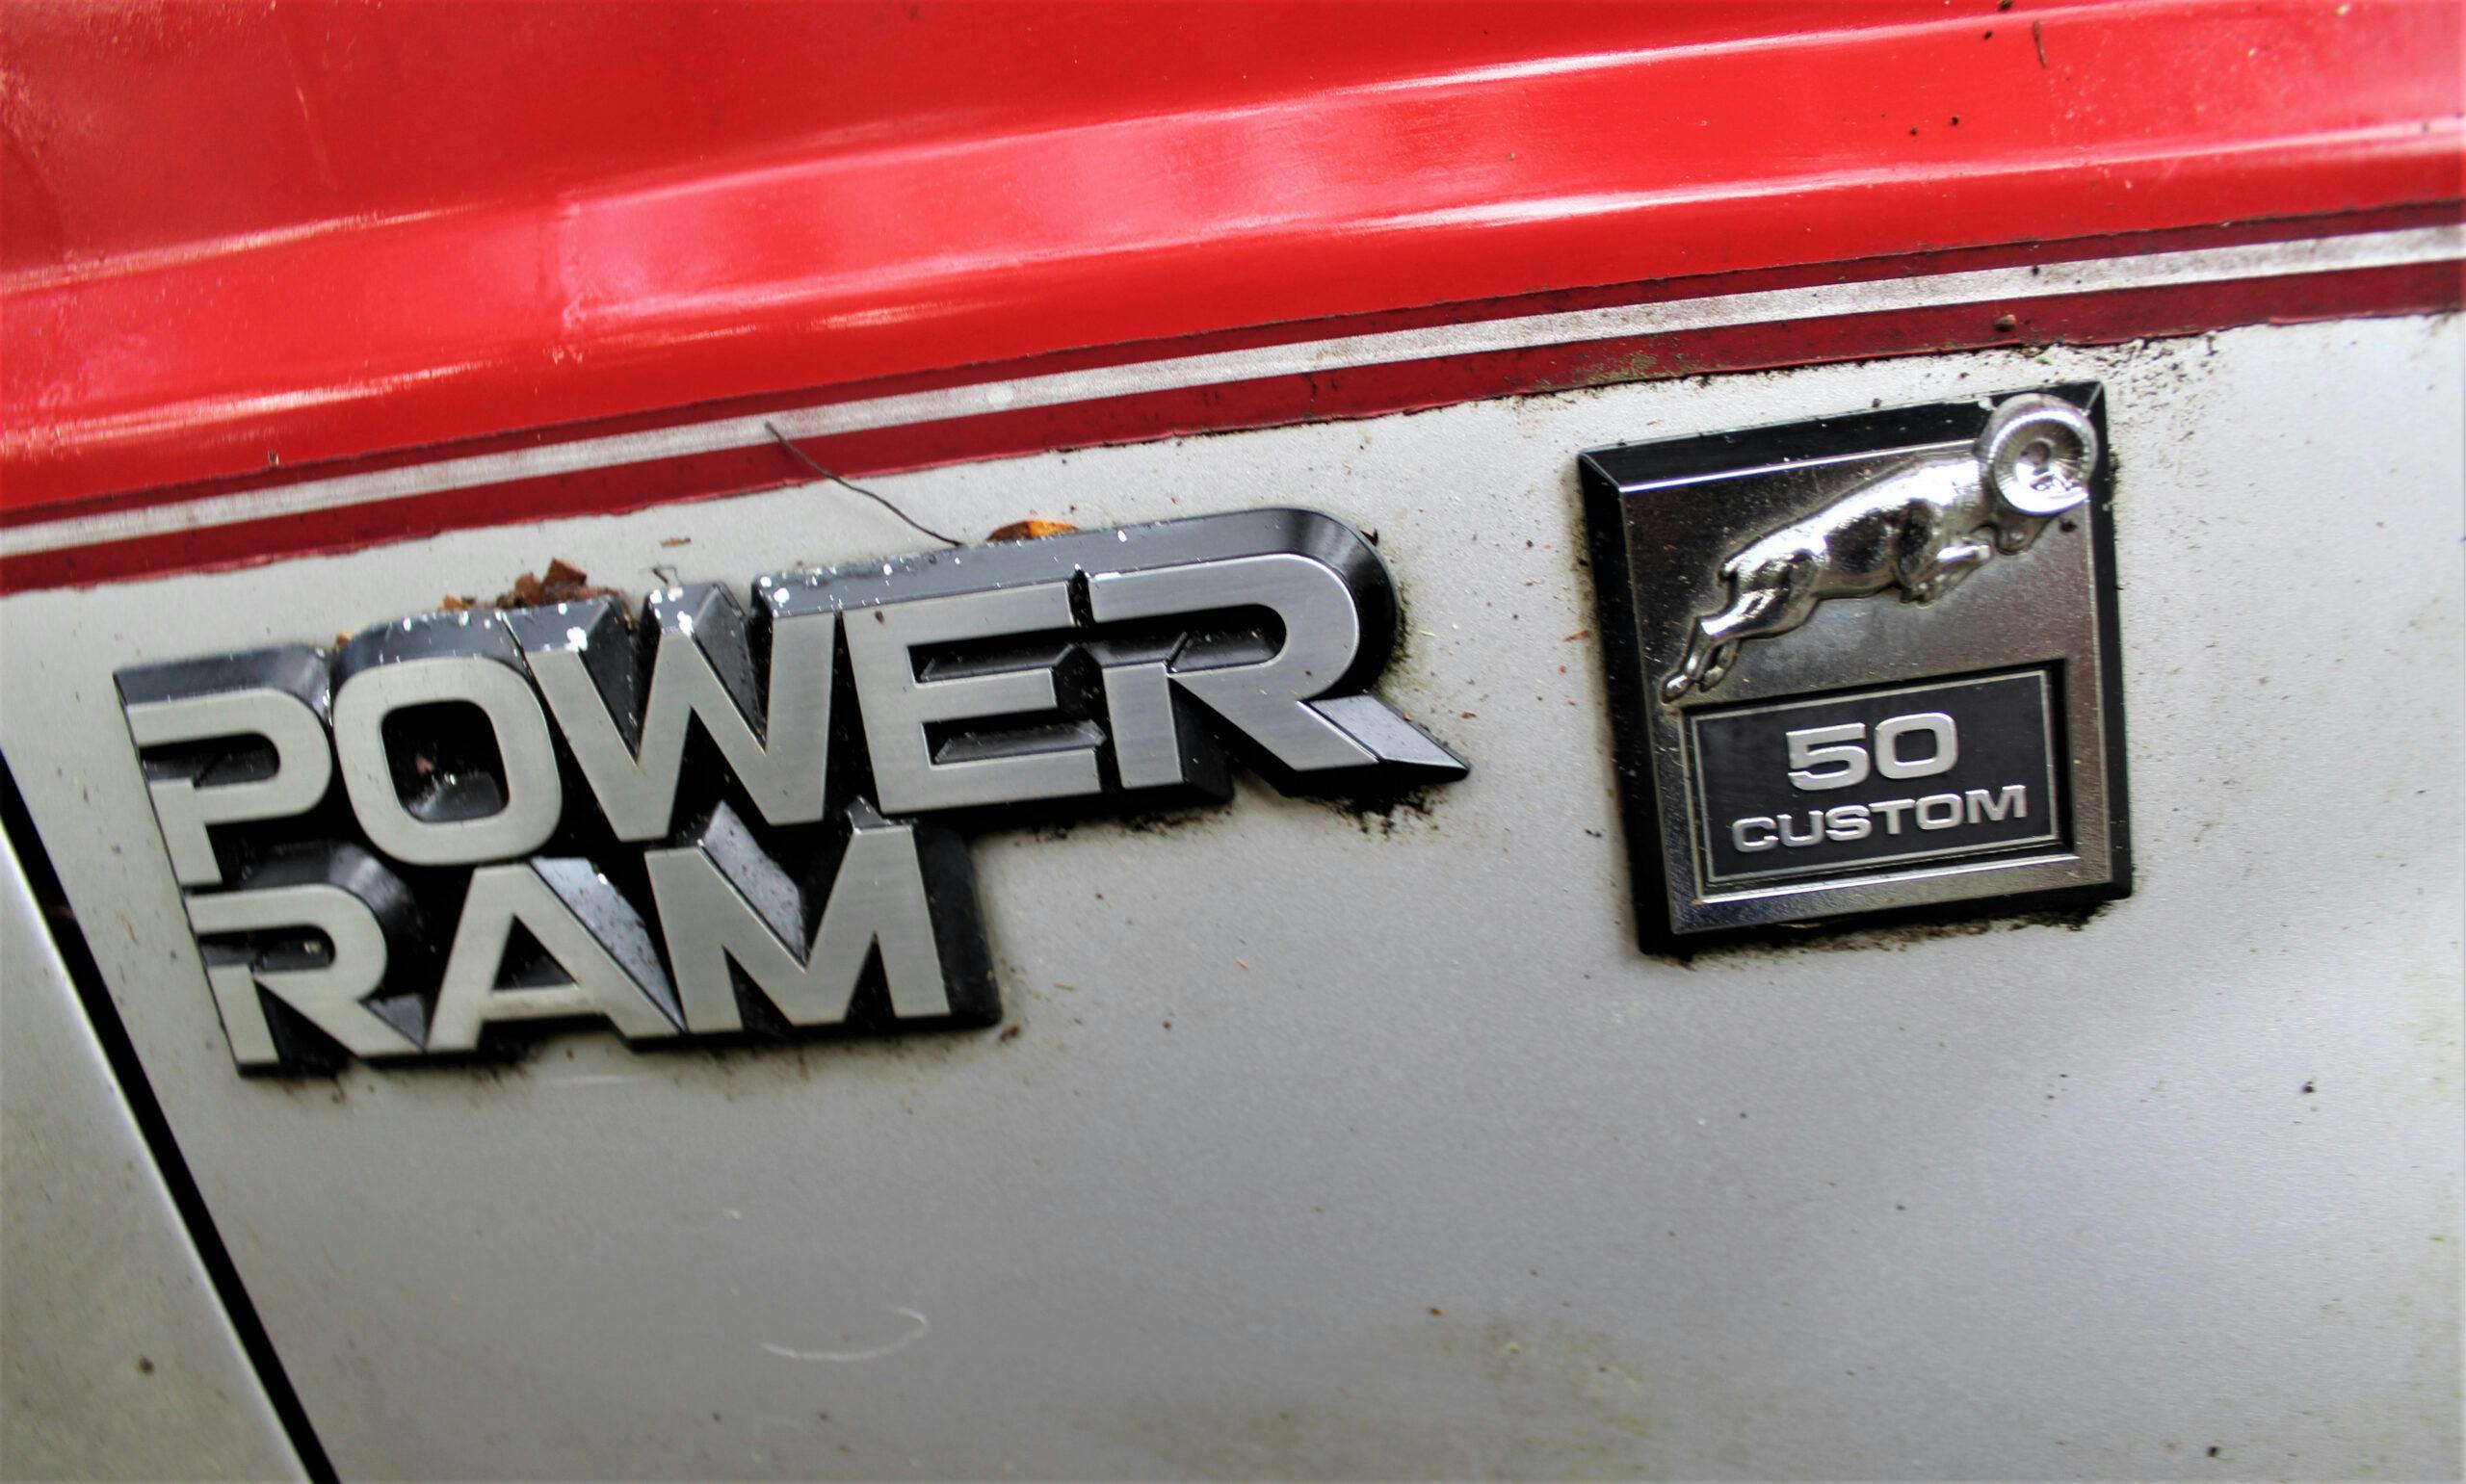 dodge 50 custom power ram badging